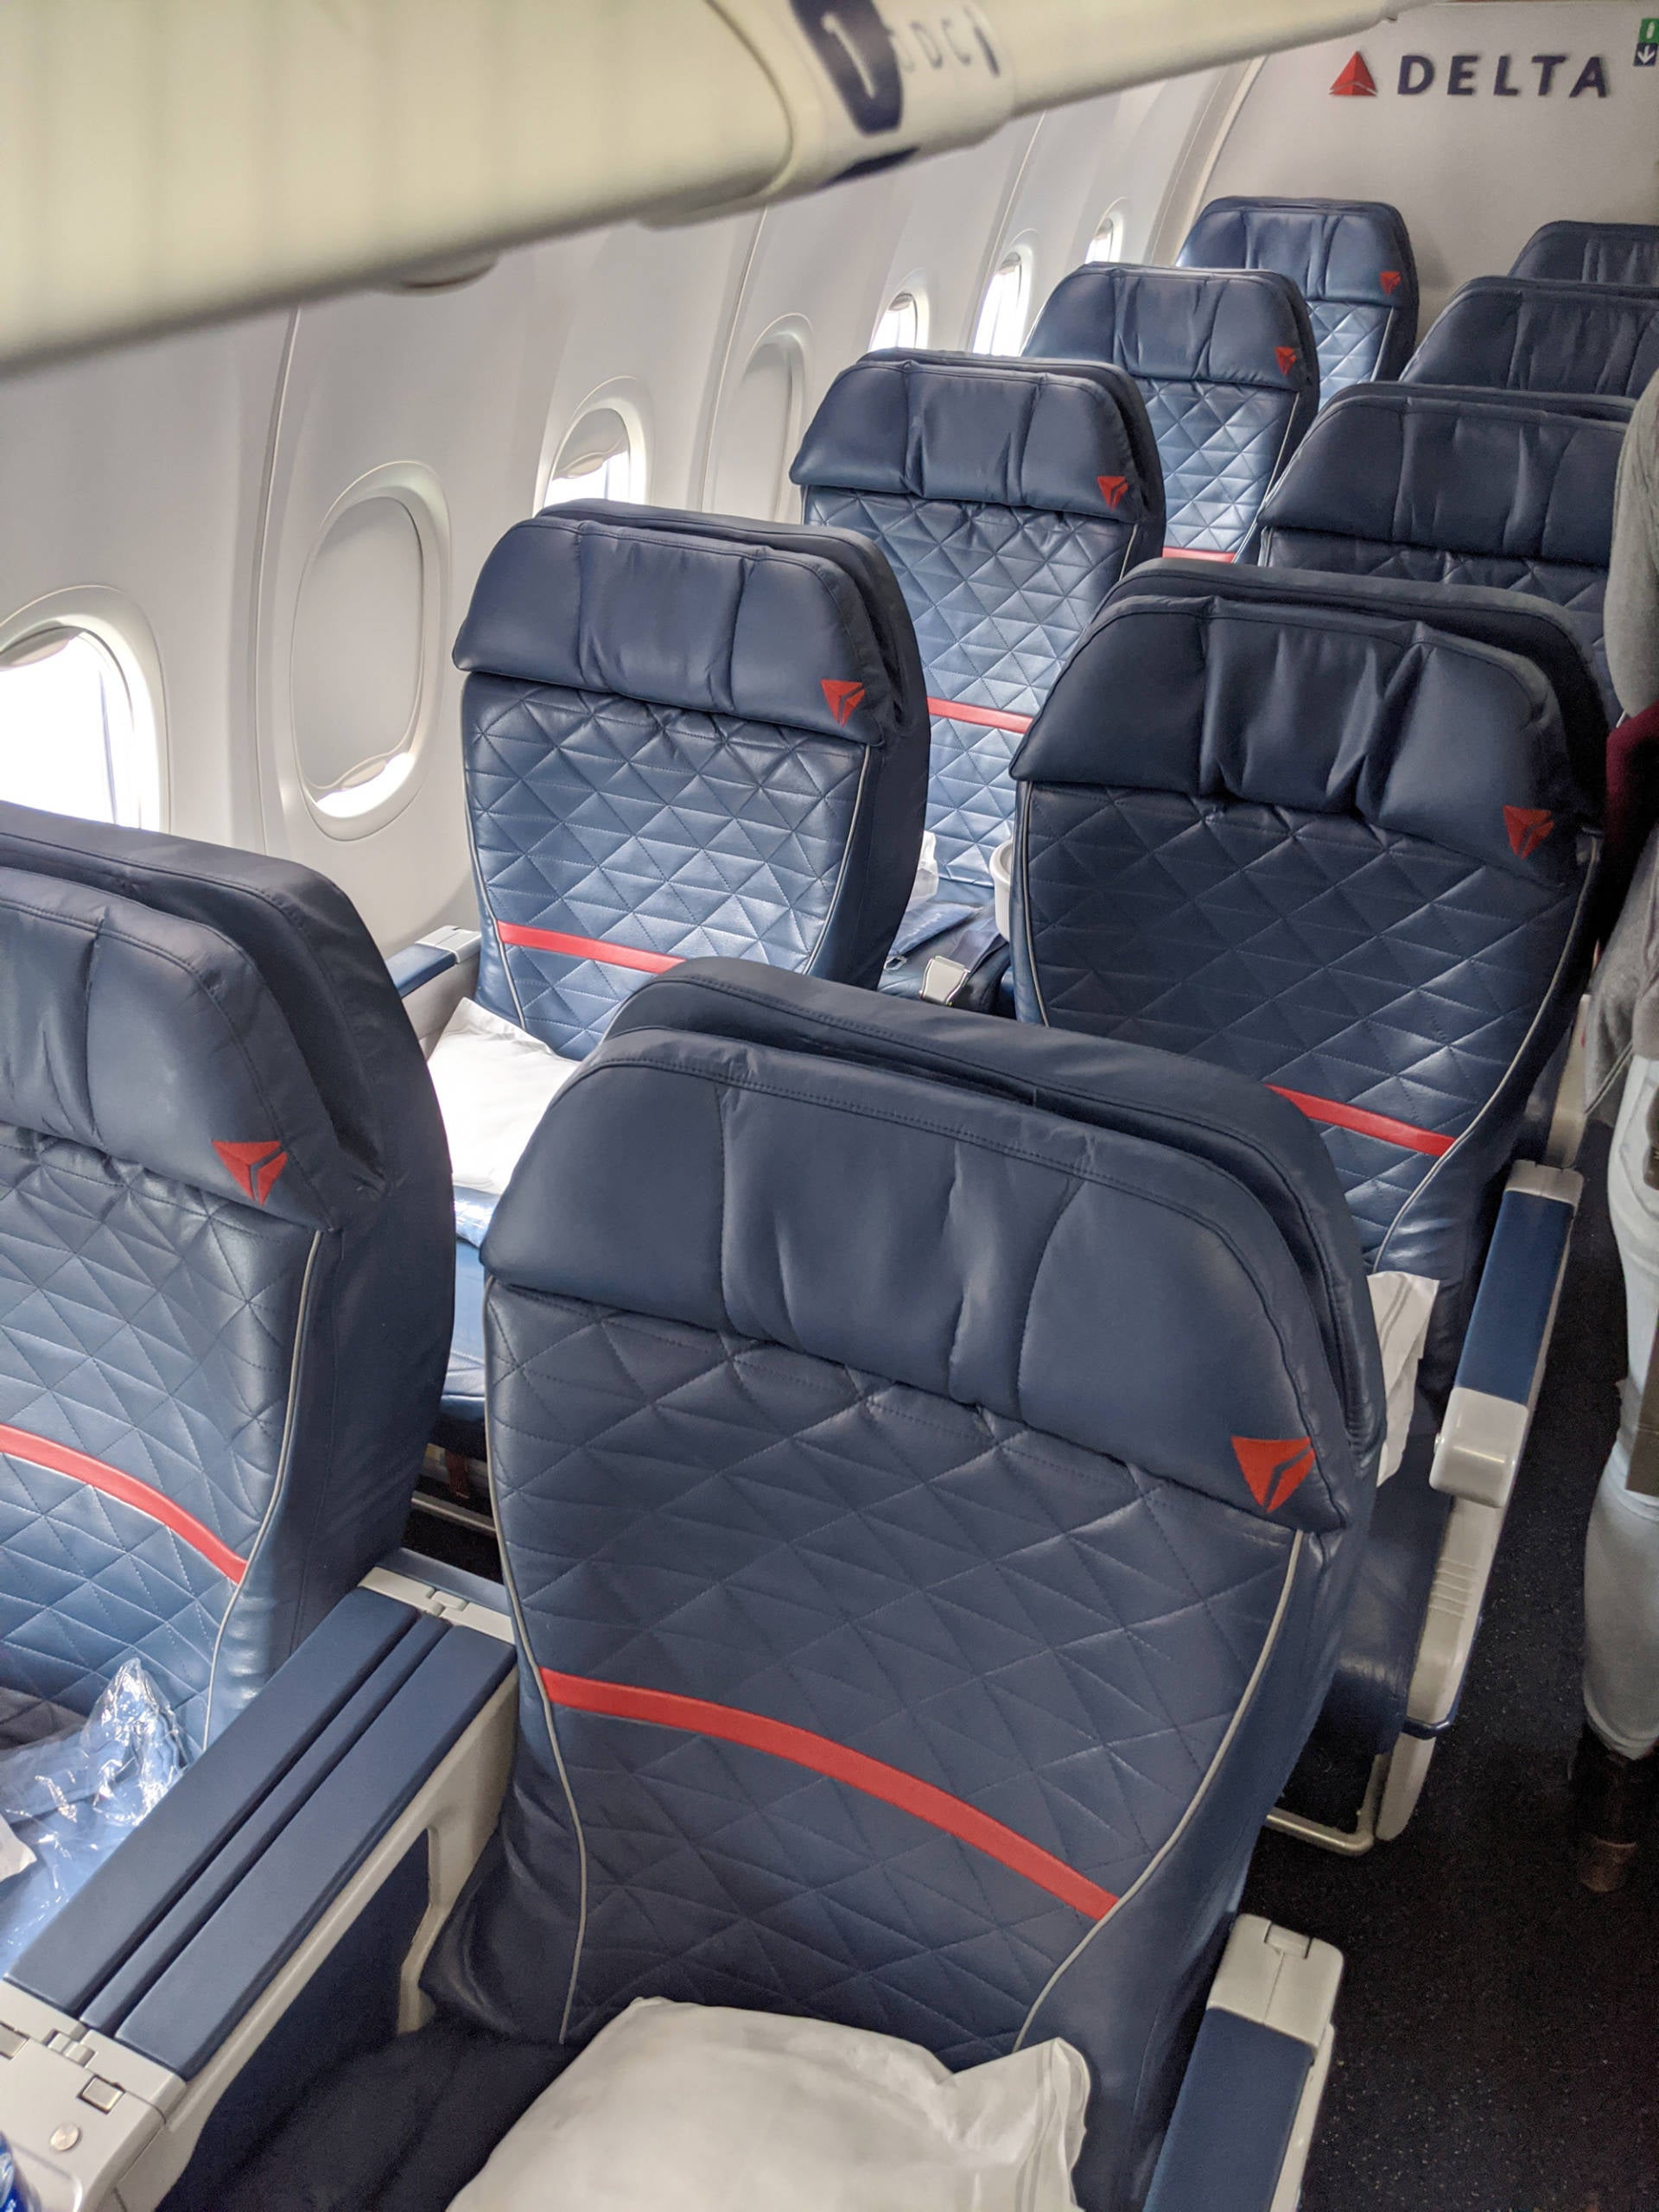 Delta Boeing 737-900ER first class seat